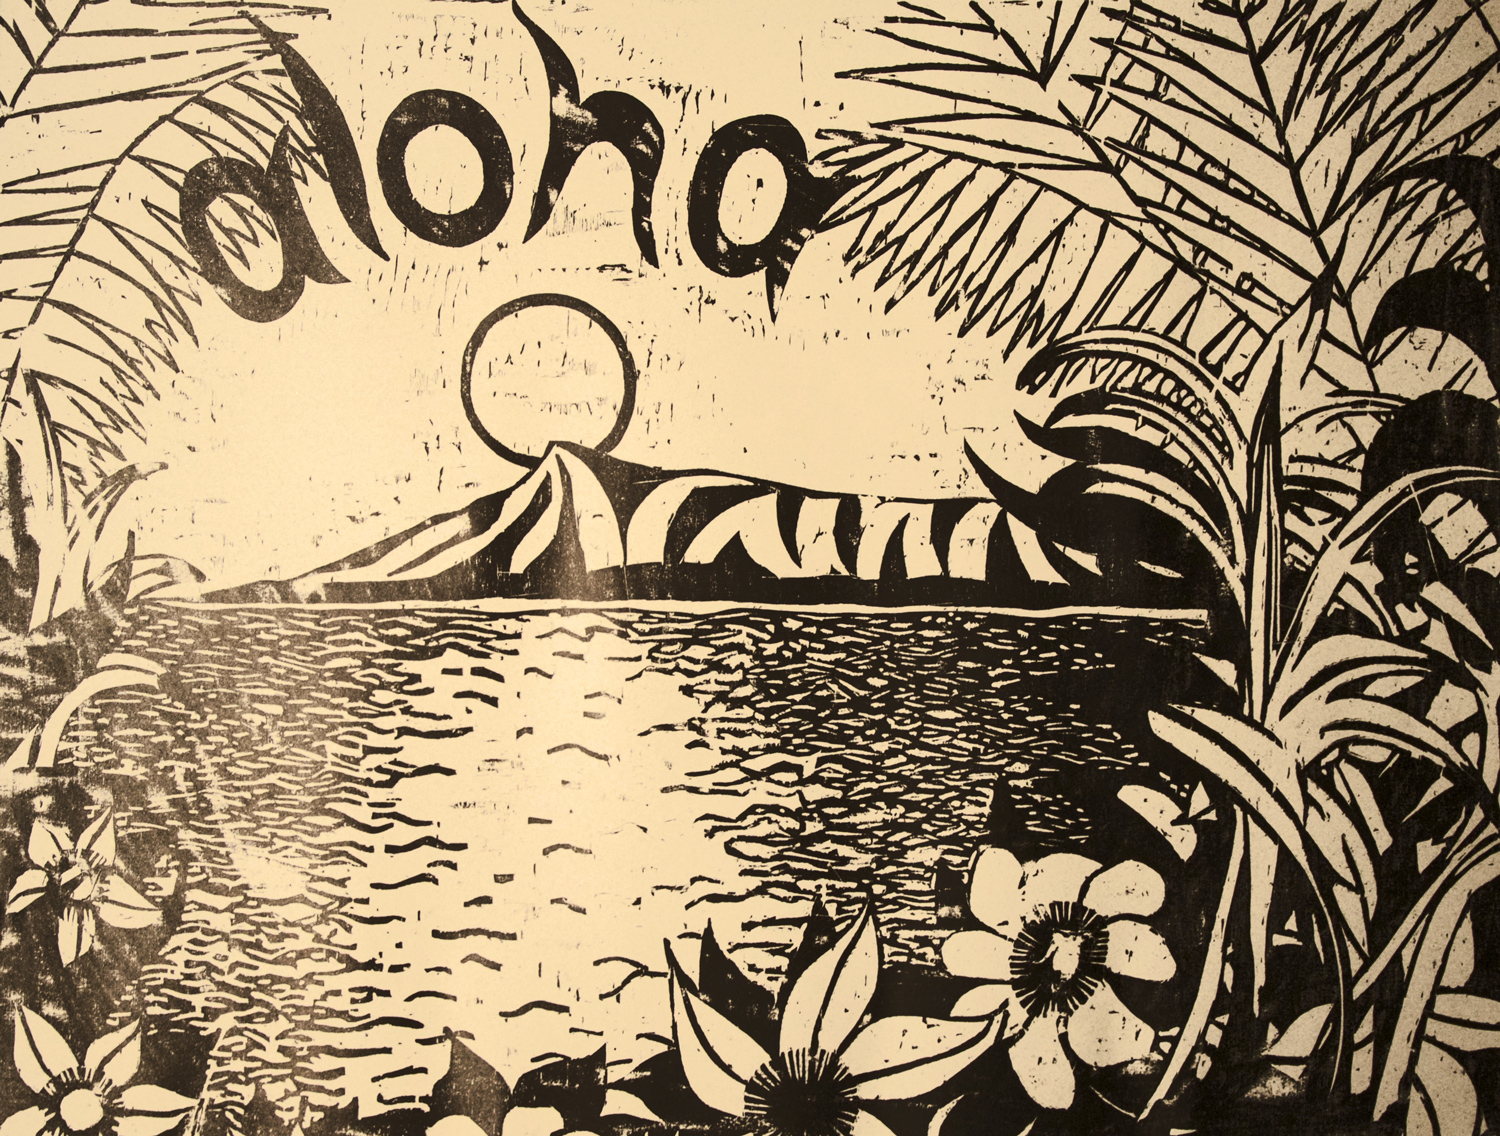 Aloha woodcut print, by Tara Marolf